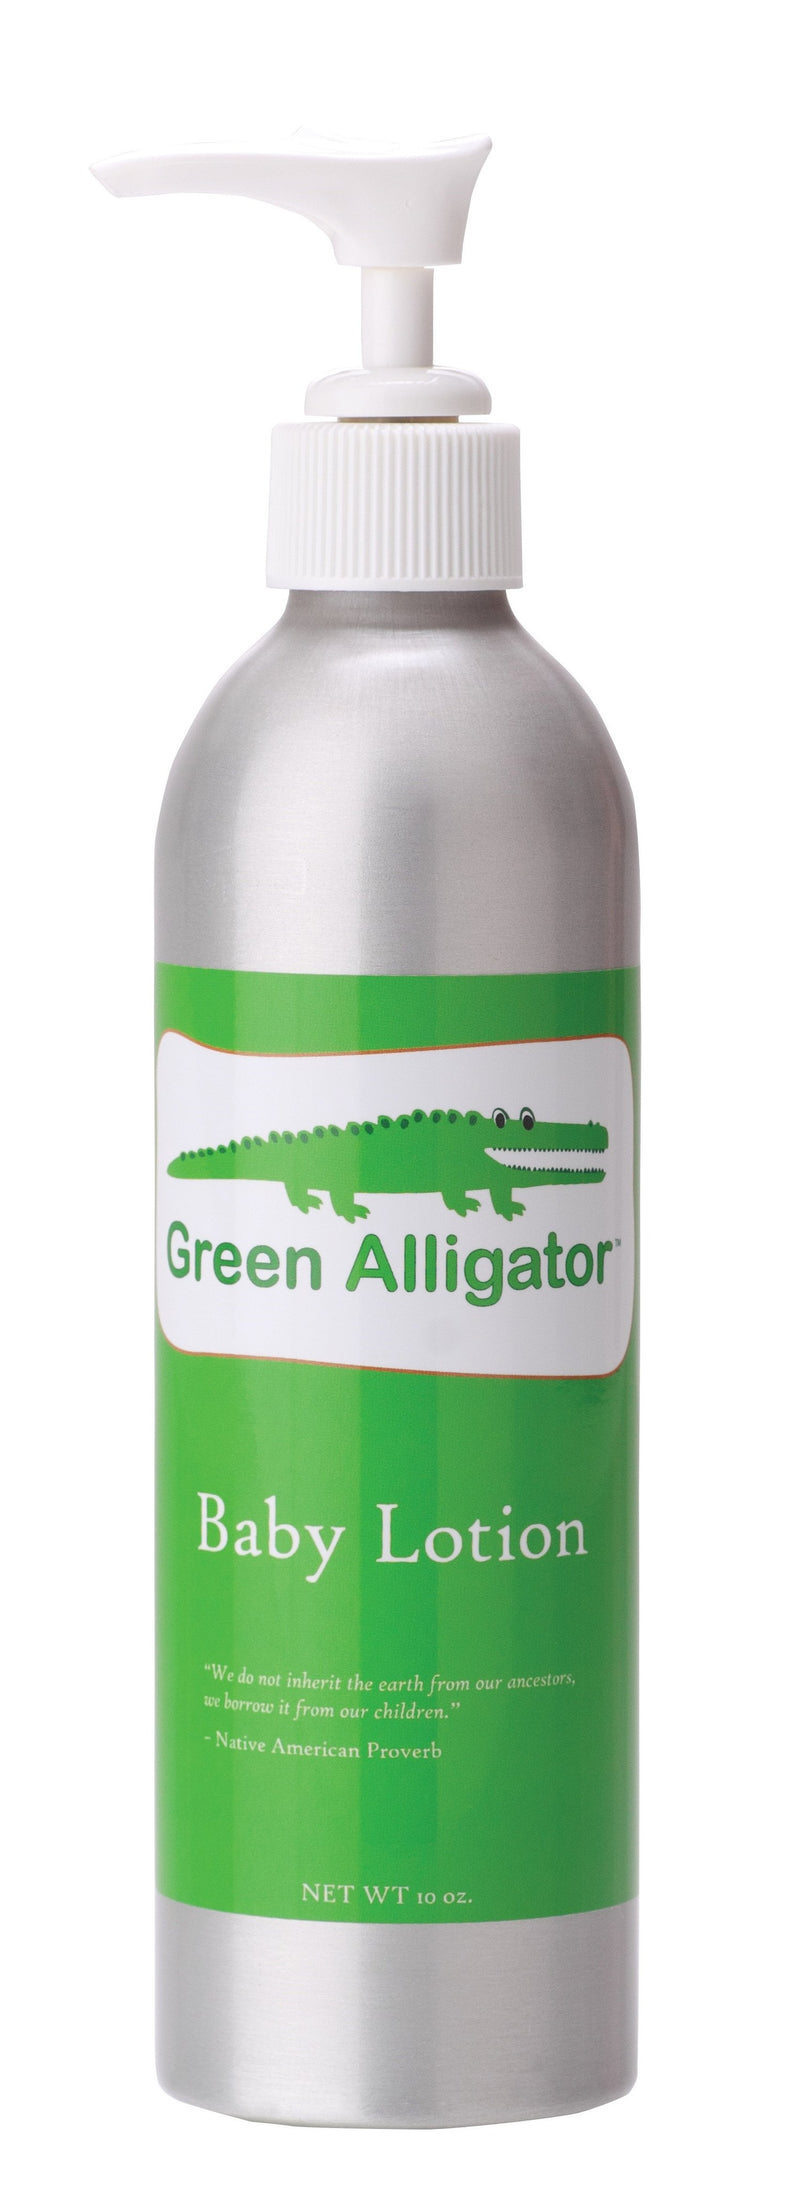 Green Alligator Baby Lotion- Celadon Road- www.celadonroad.com